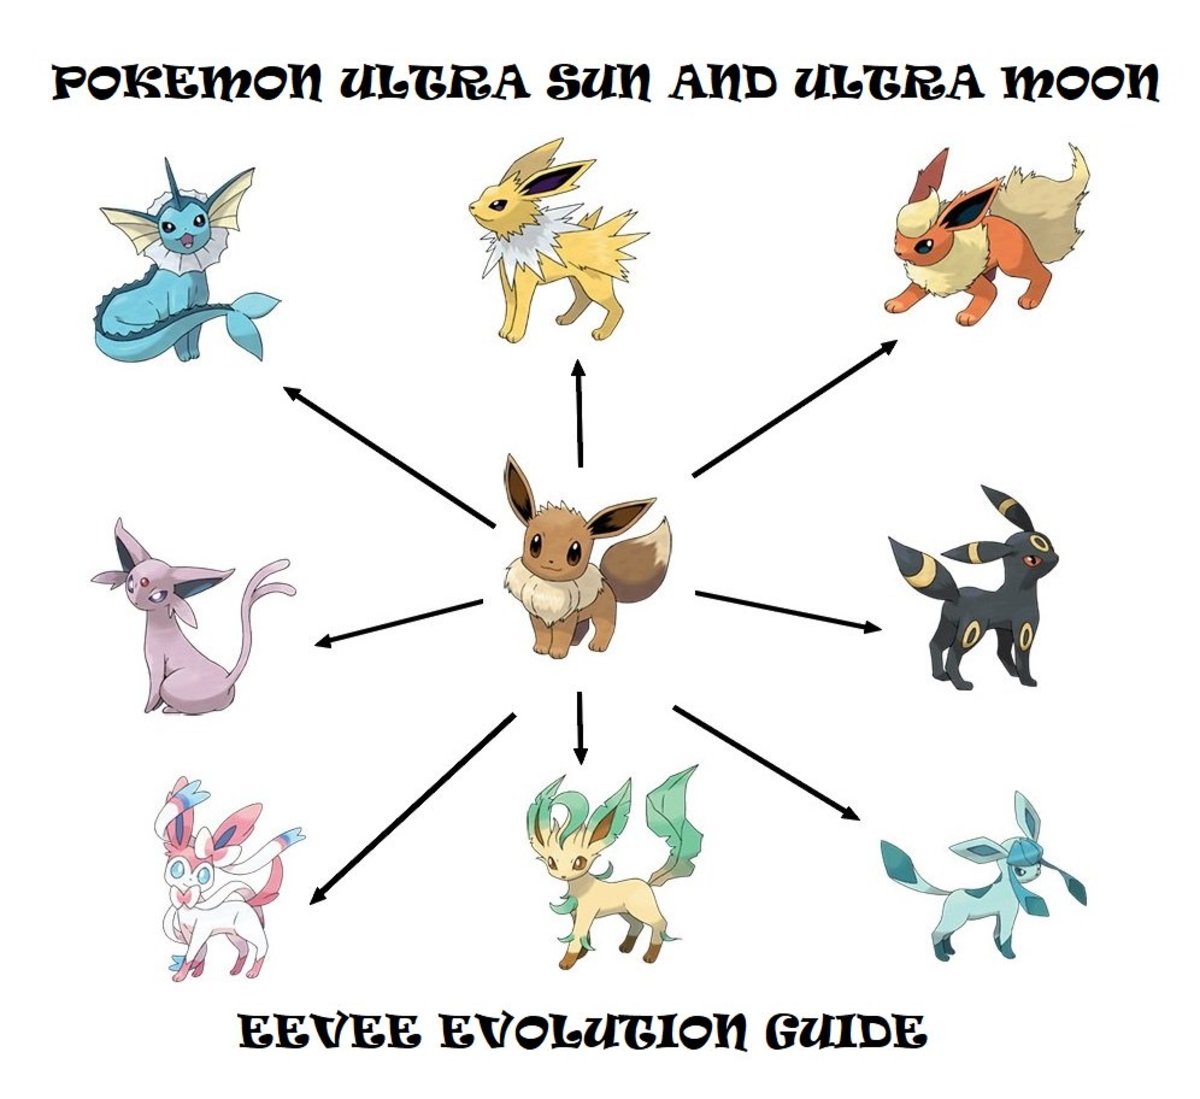 "Pokémon Ultra Sun and Ultra Moon" Eevee Evolution Guide